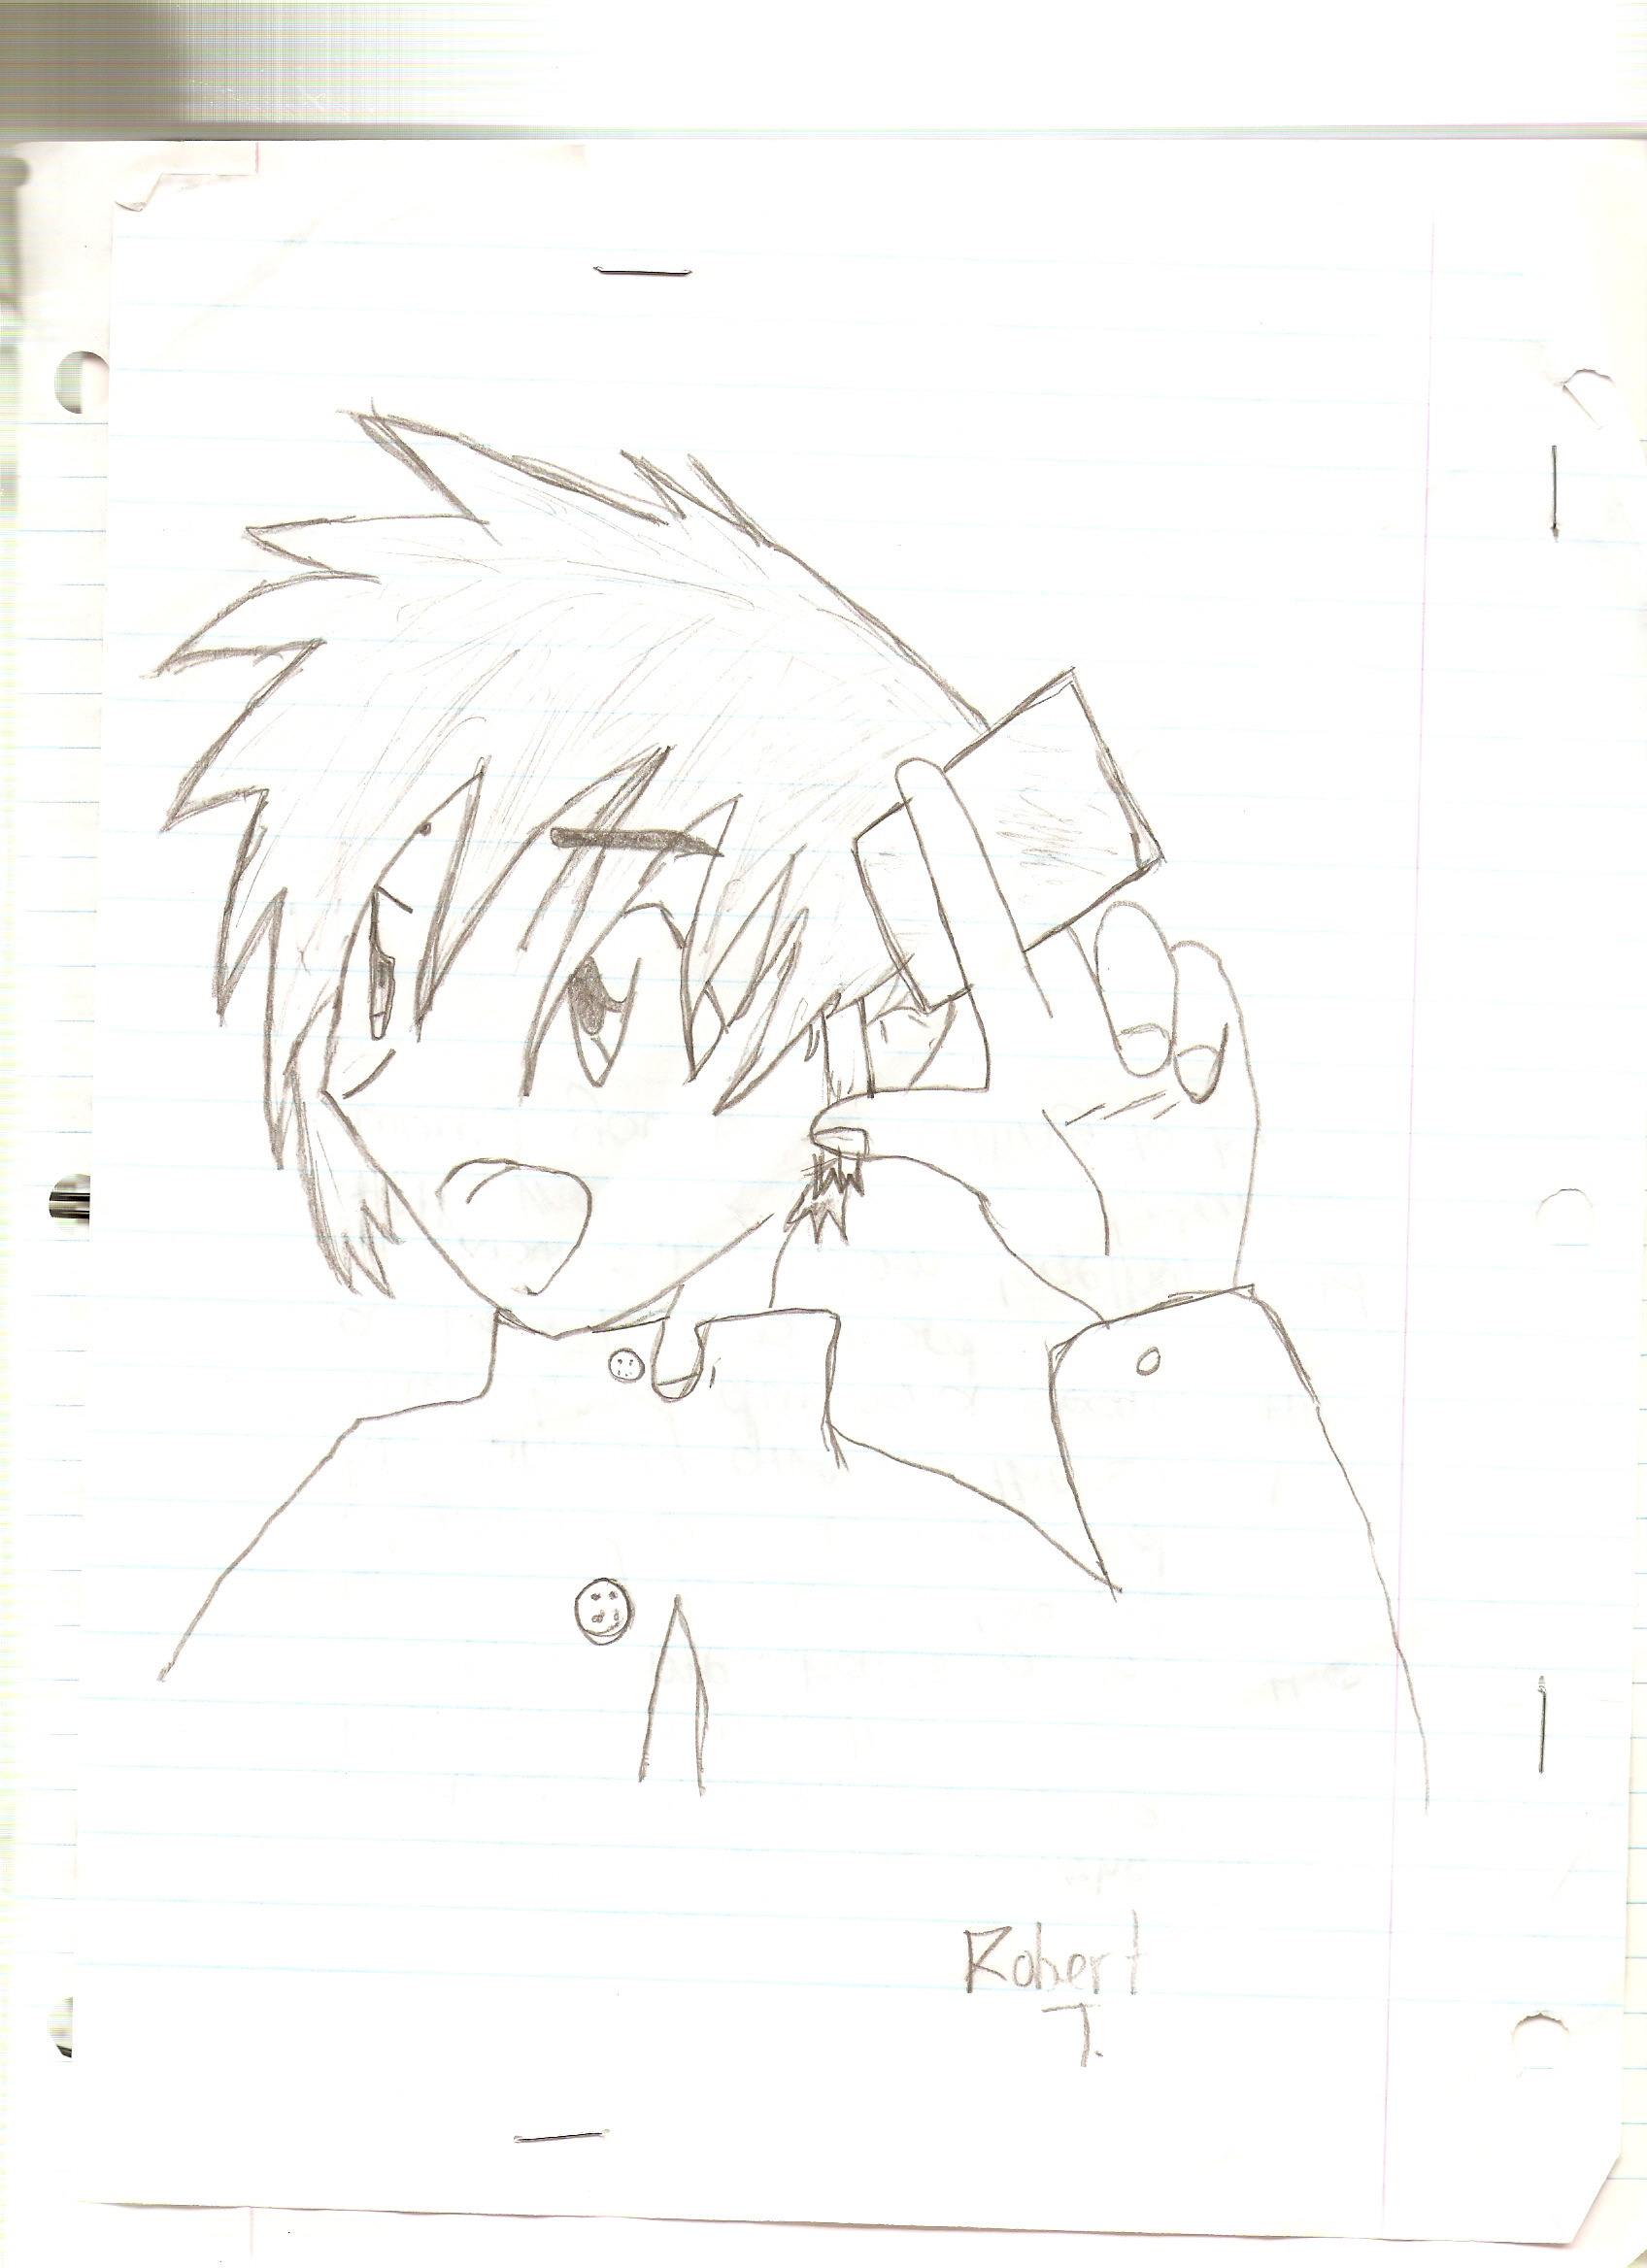 Random Manga drawing by rdtickell1